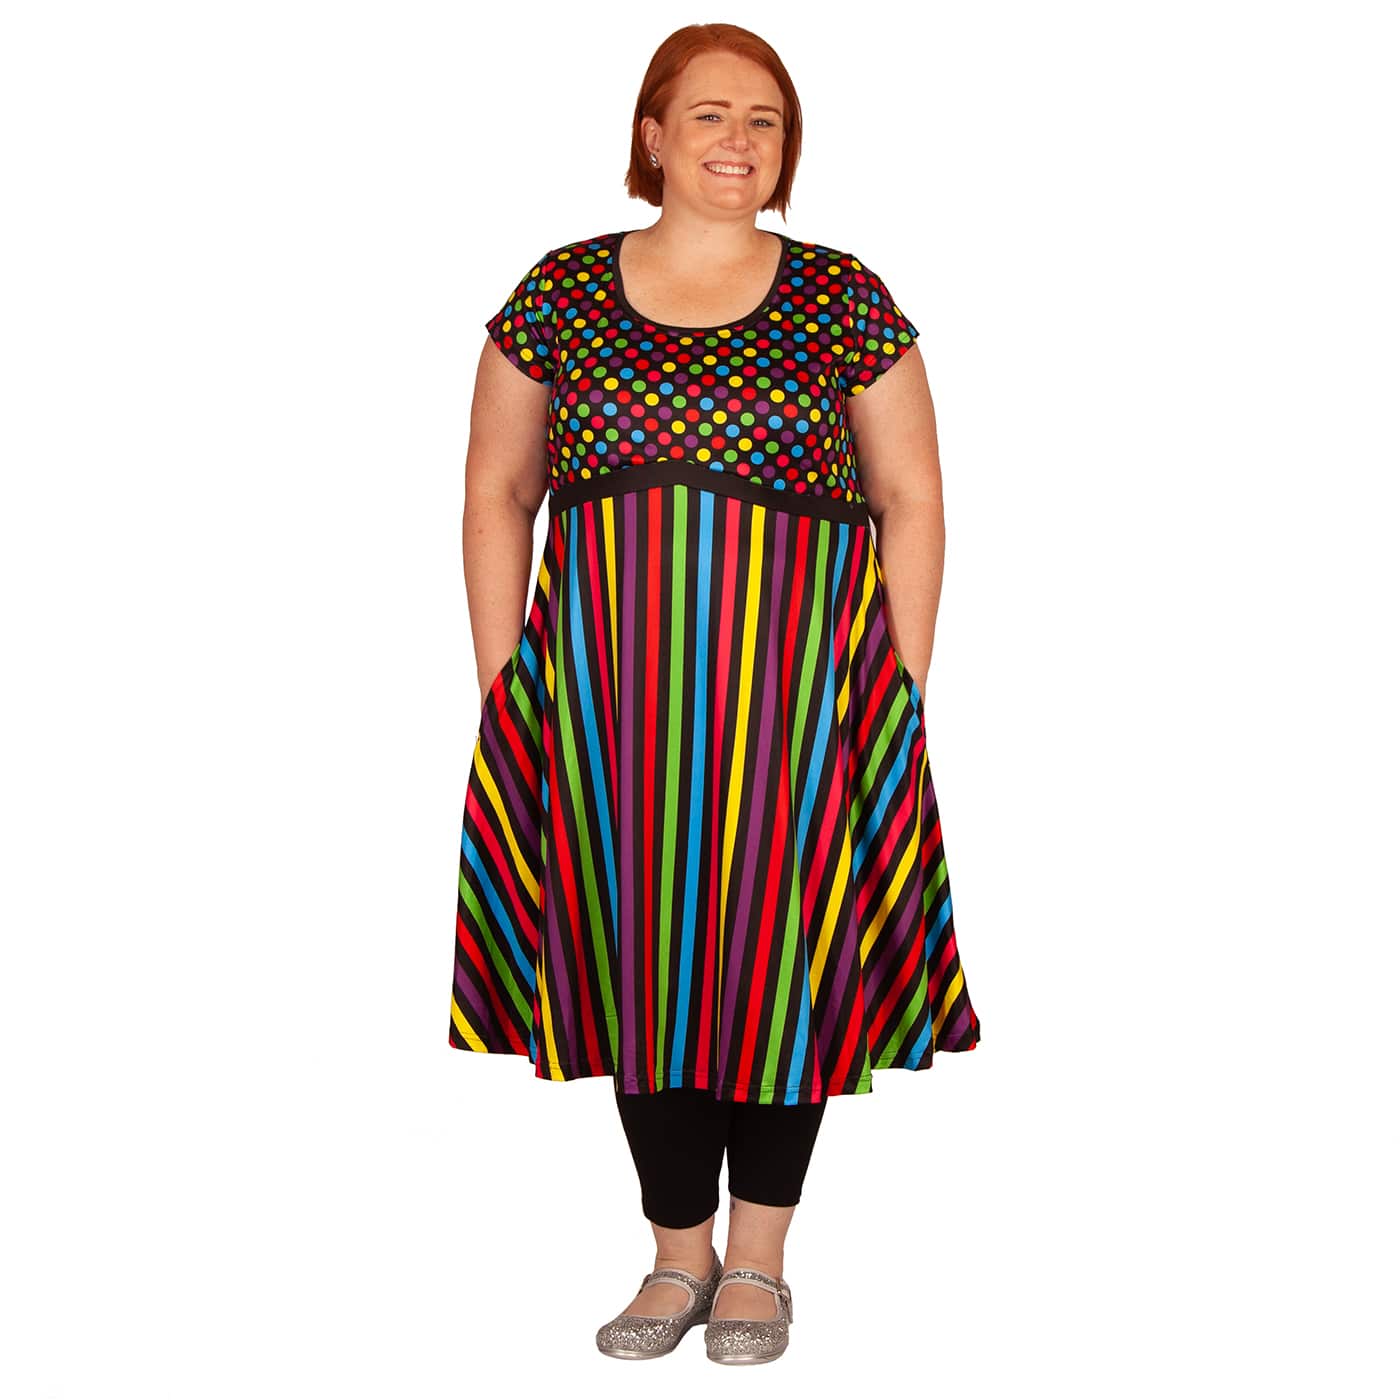 Confetti Tea Dress by RainbowsAndFairies.com (Rainbow Colours - Polka Dot - Stripes - Vibrant - Rock & Roll - Dress With Pockets - Rockabilly - Vintage Inspired) - SKU: CL_TEADR_CONFT_ORG - Pic 07